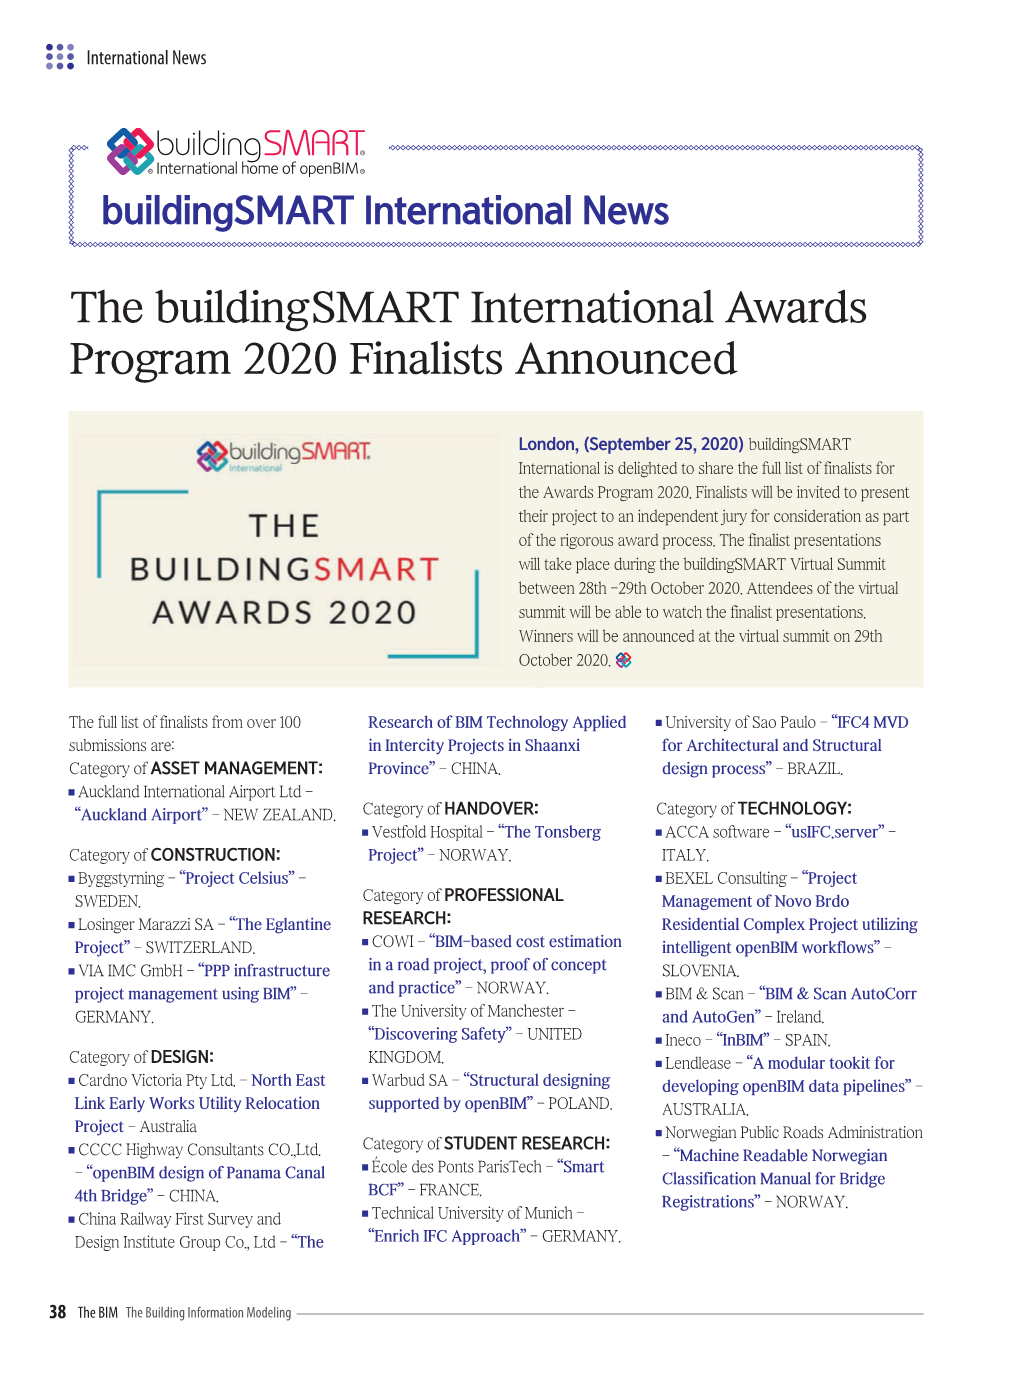 The Buildingsmart International Awards Program 2020 Finalists Announced